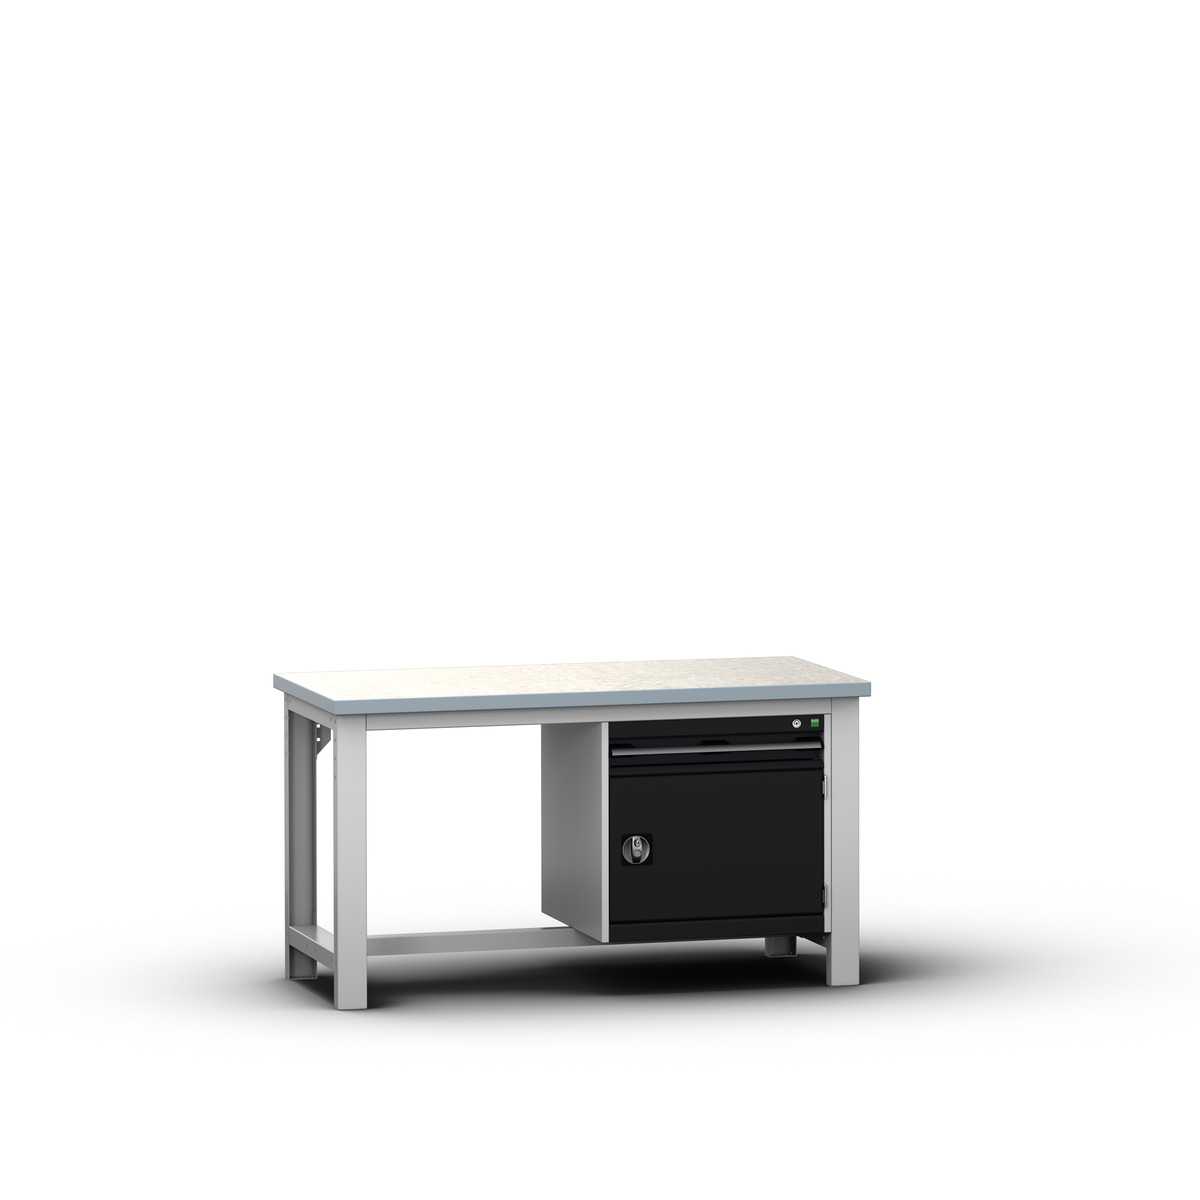 41003389. - cubio framework bench (lino) 